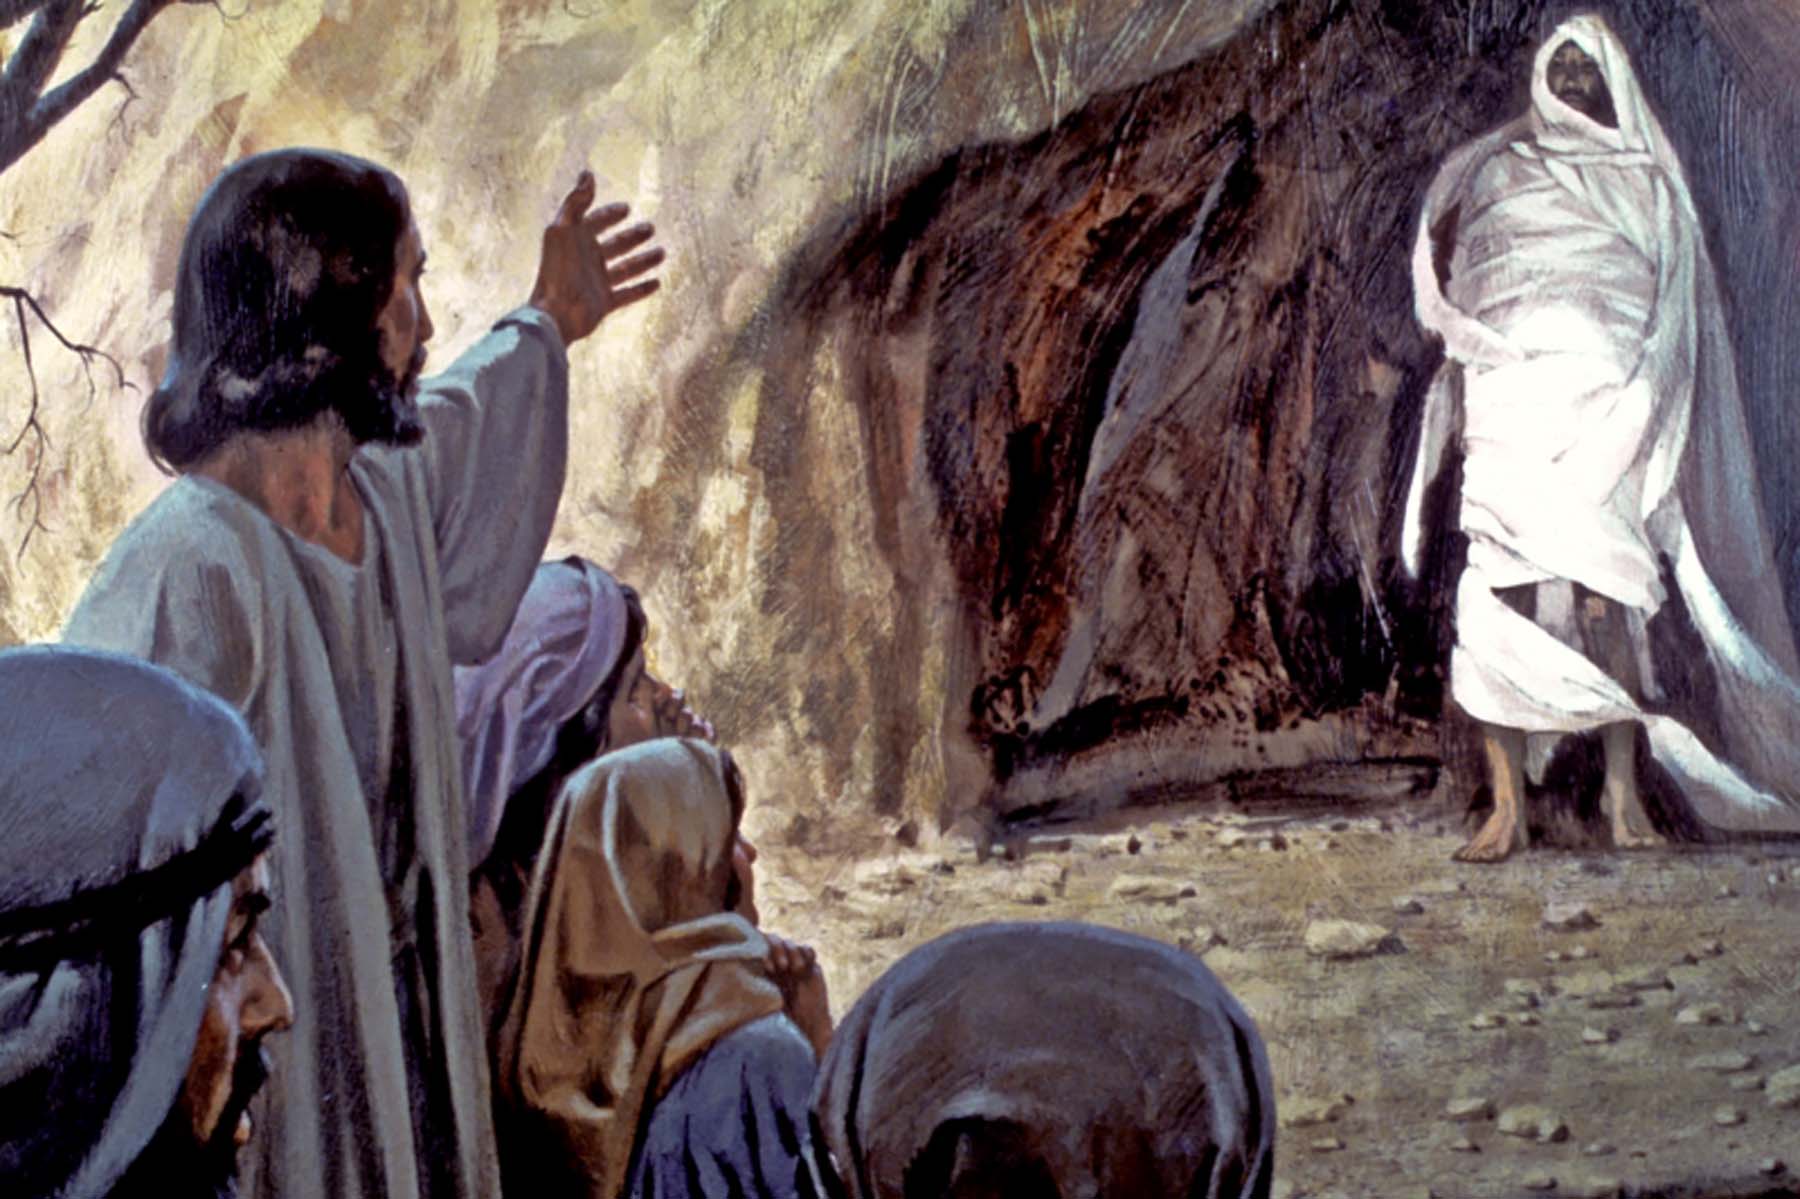 <span class="orderbynum">081</span>Jesus Raises Lazarus From the Dead